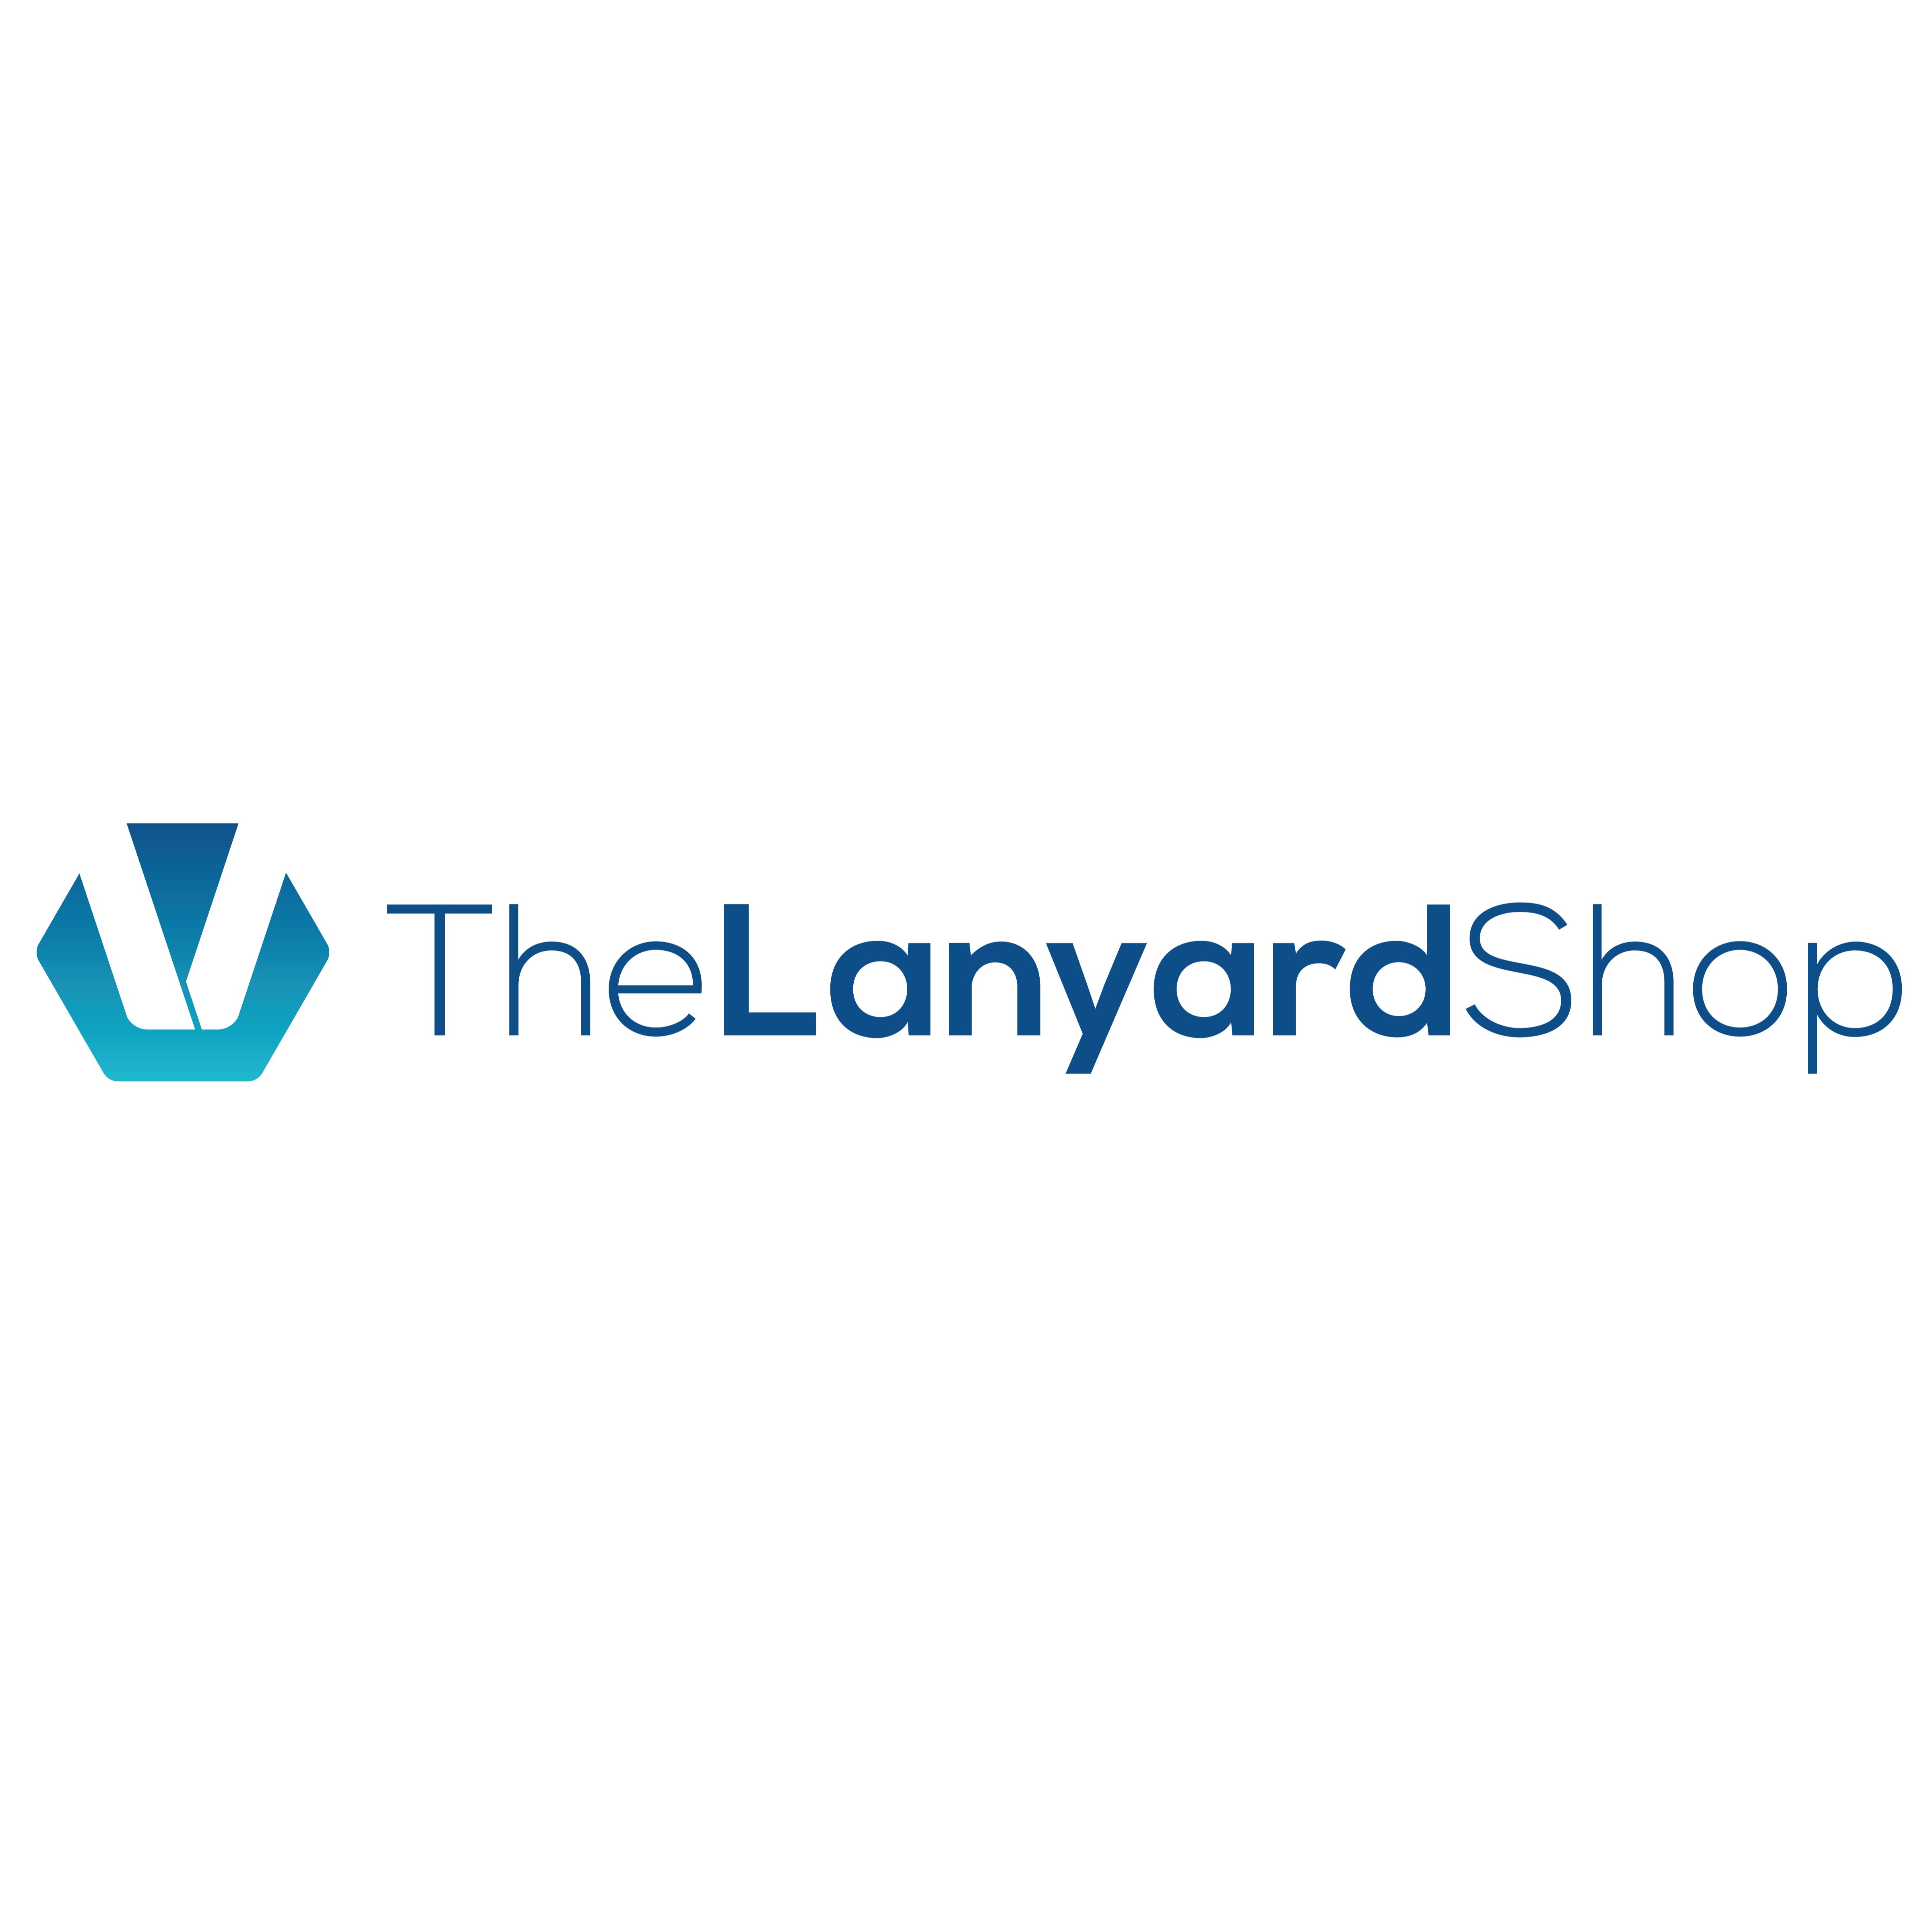 The Lanyard Shop